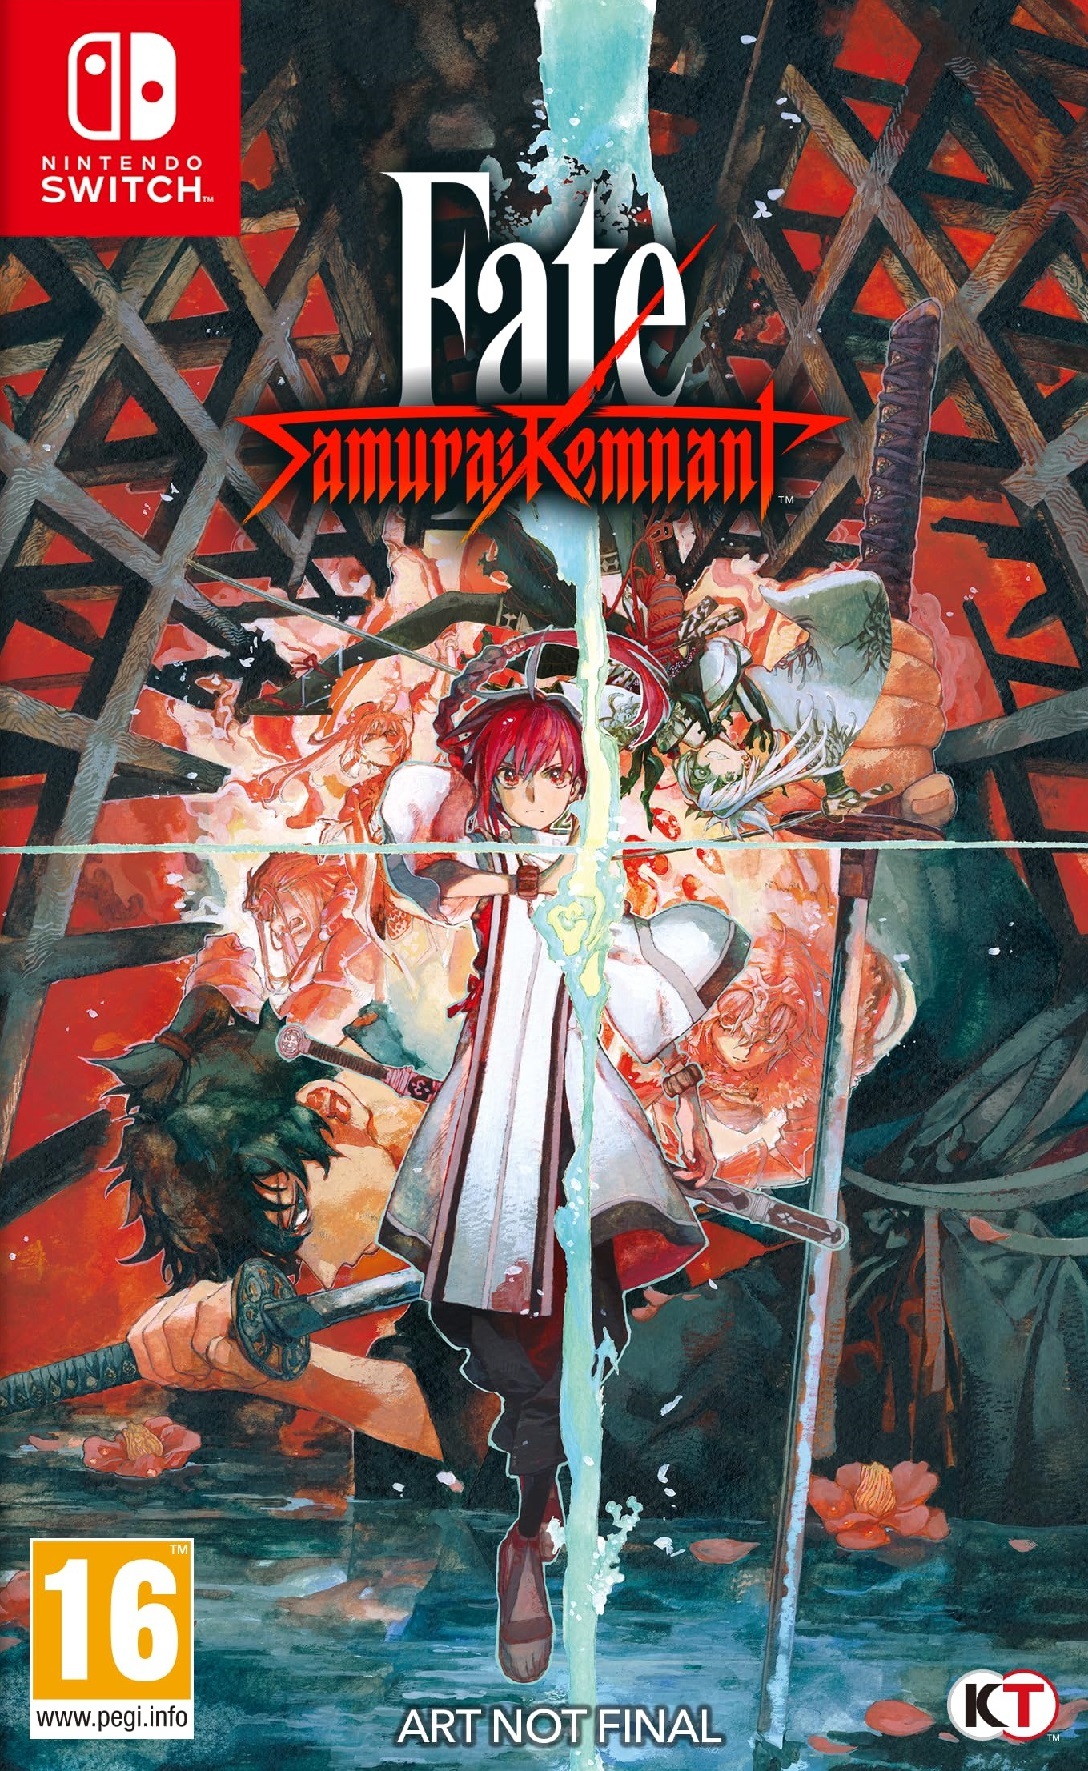 jaquette du jeu vidéo Fate/Samurai Remnant